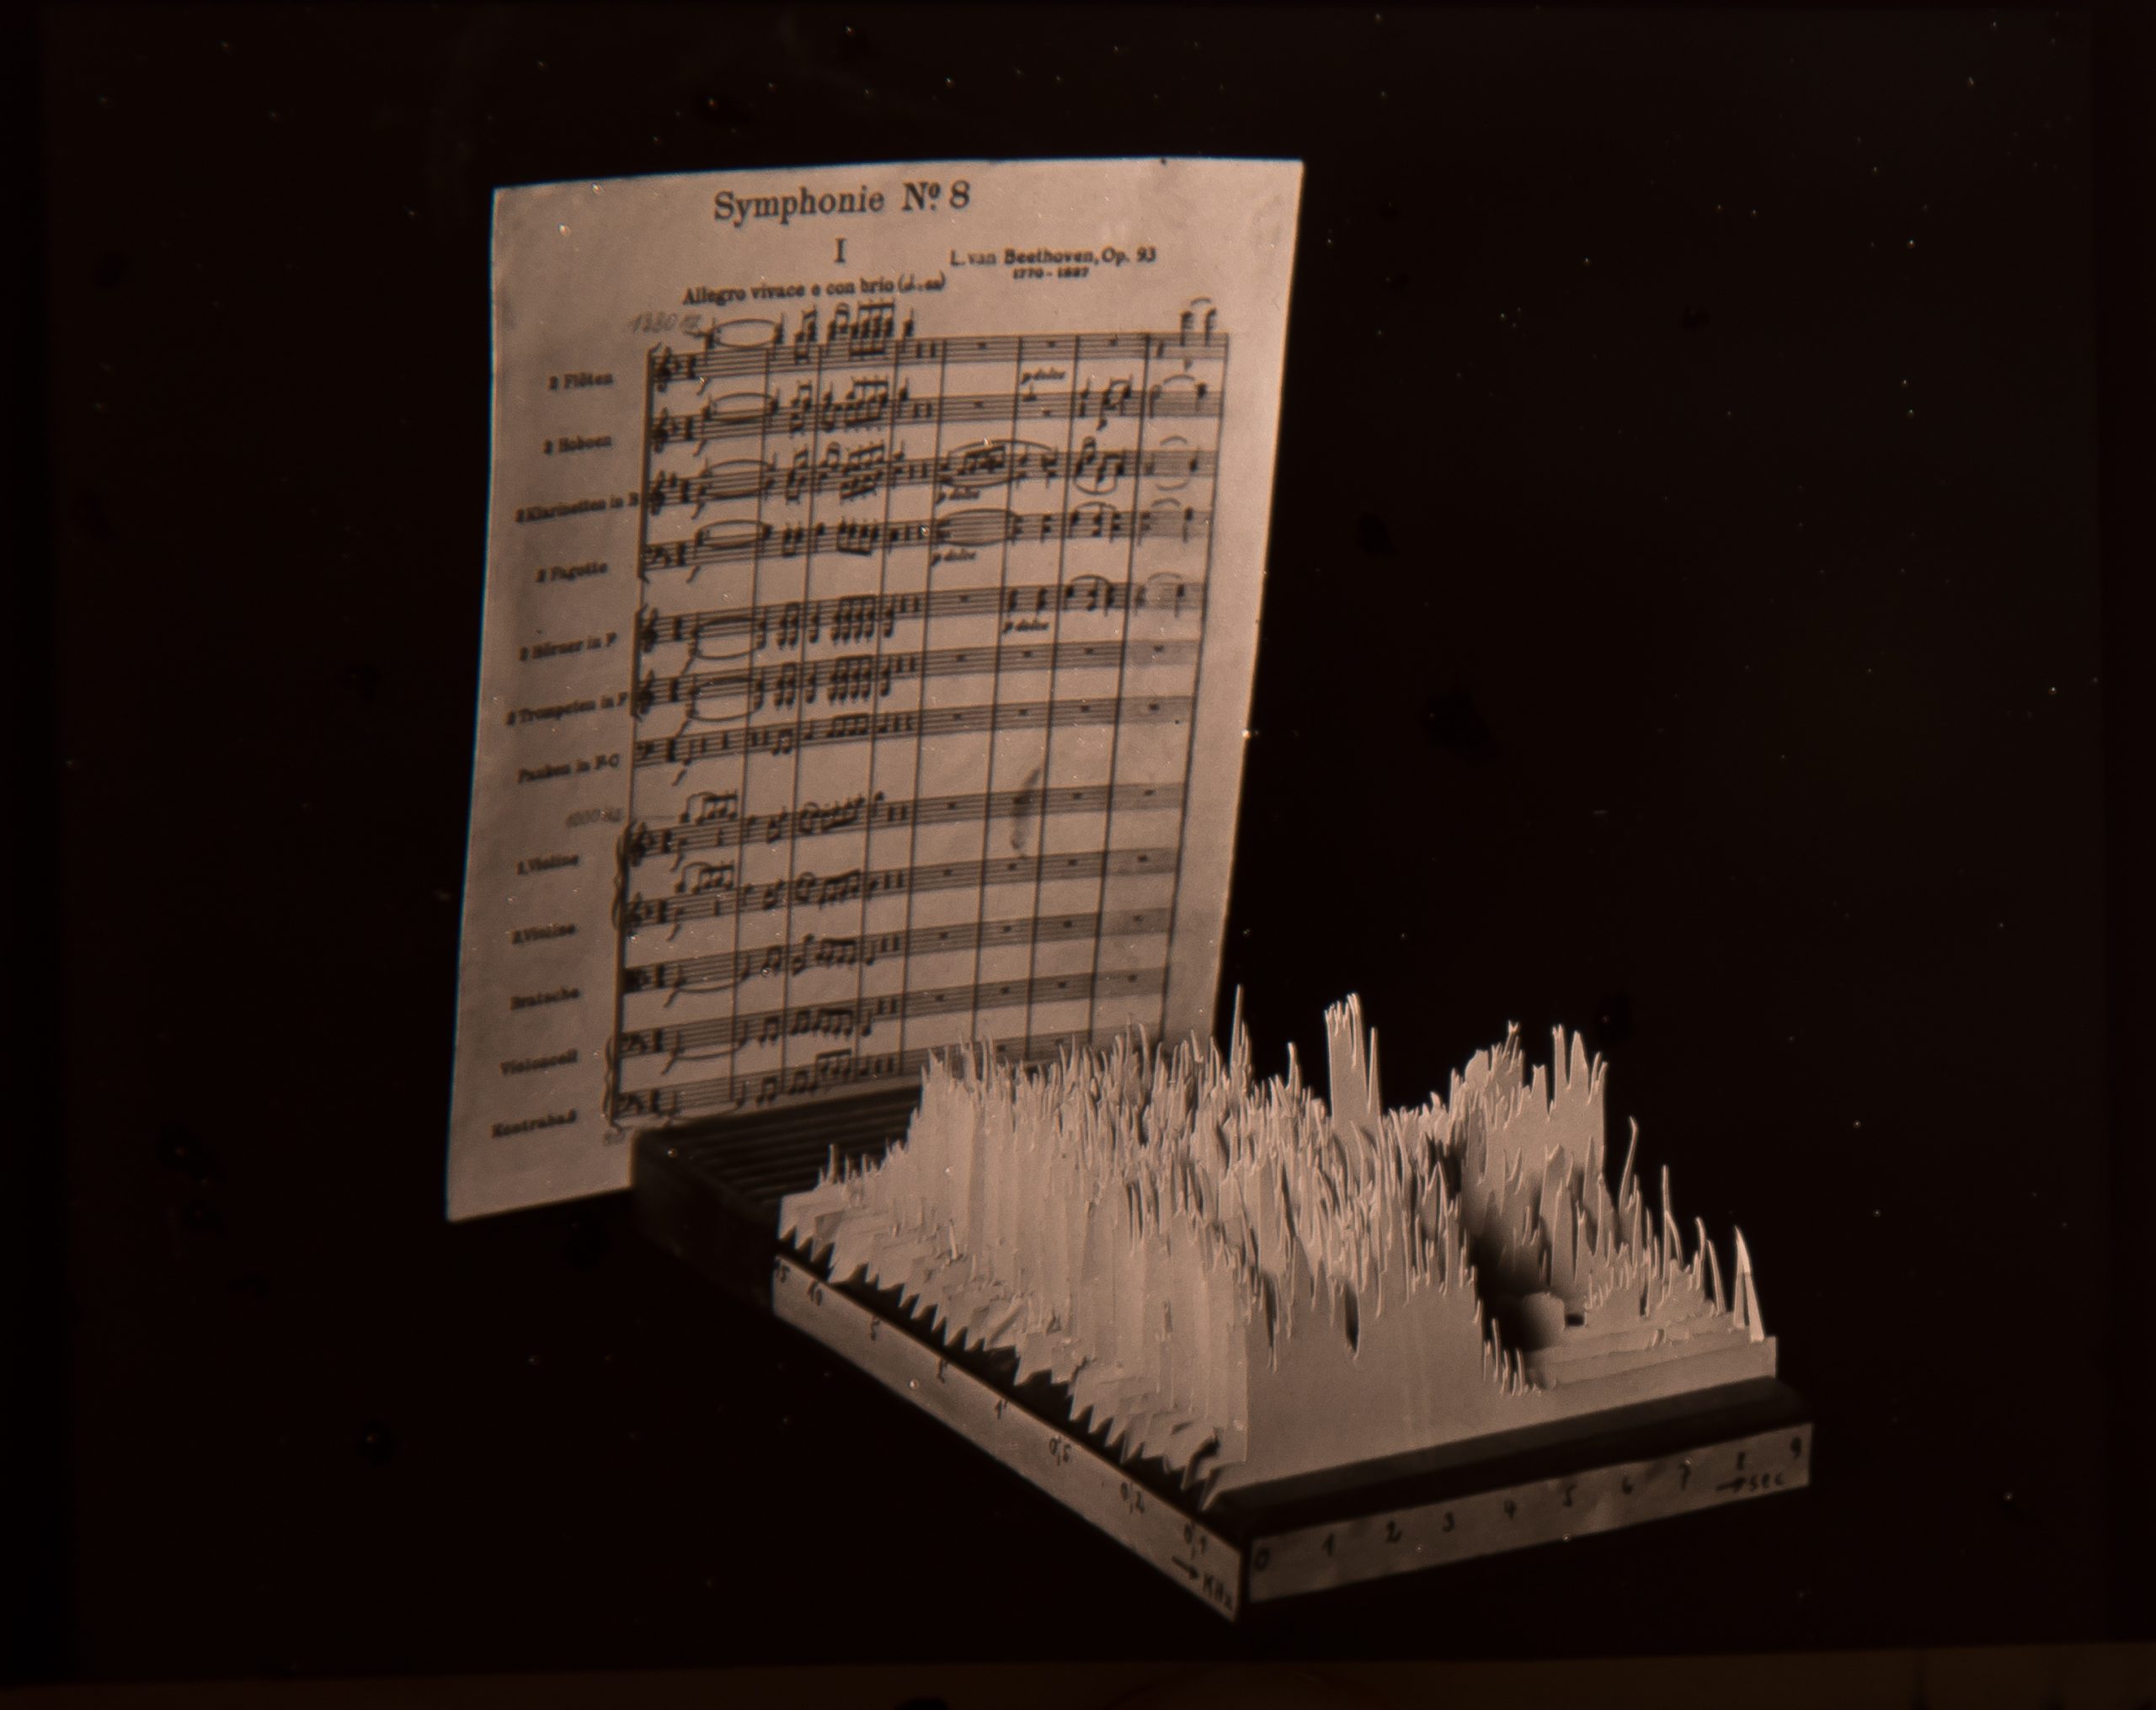 Handmade paper waterfall plot: Beethoven’s 8th symphony